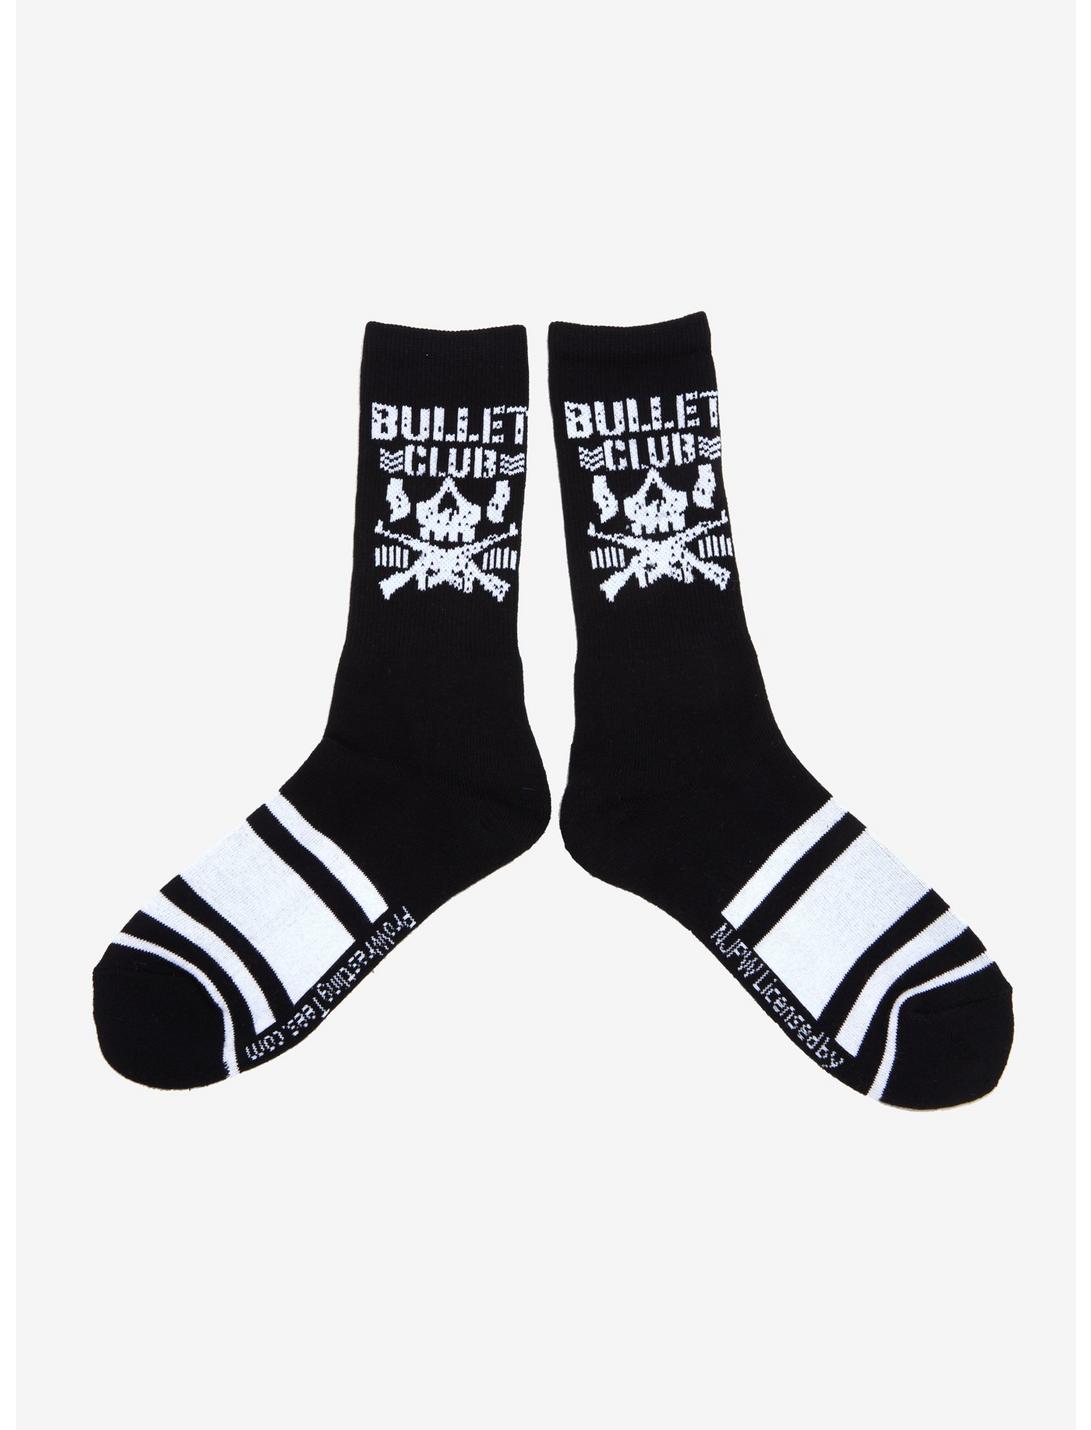 New Japan Pro-Wrestling Bullet Club Crew Socks, , hi-res